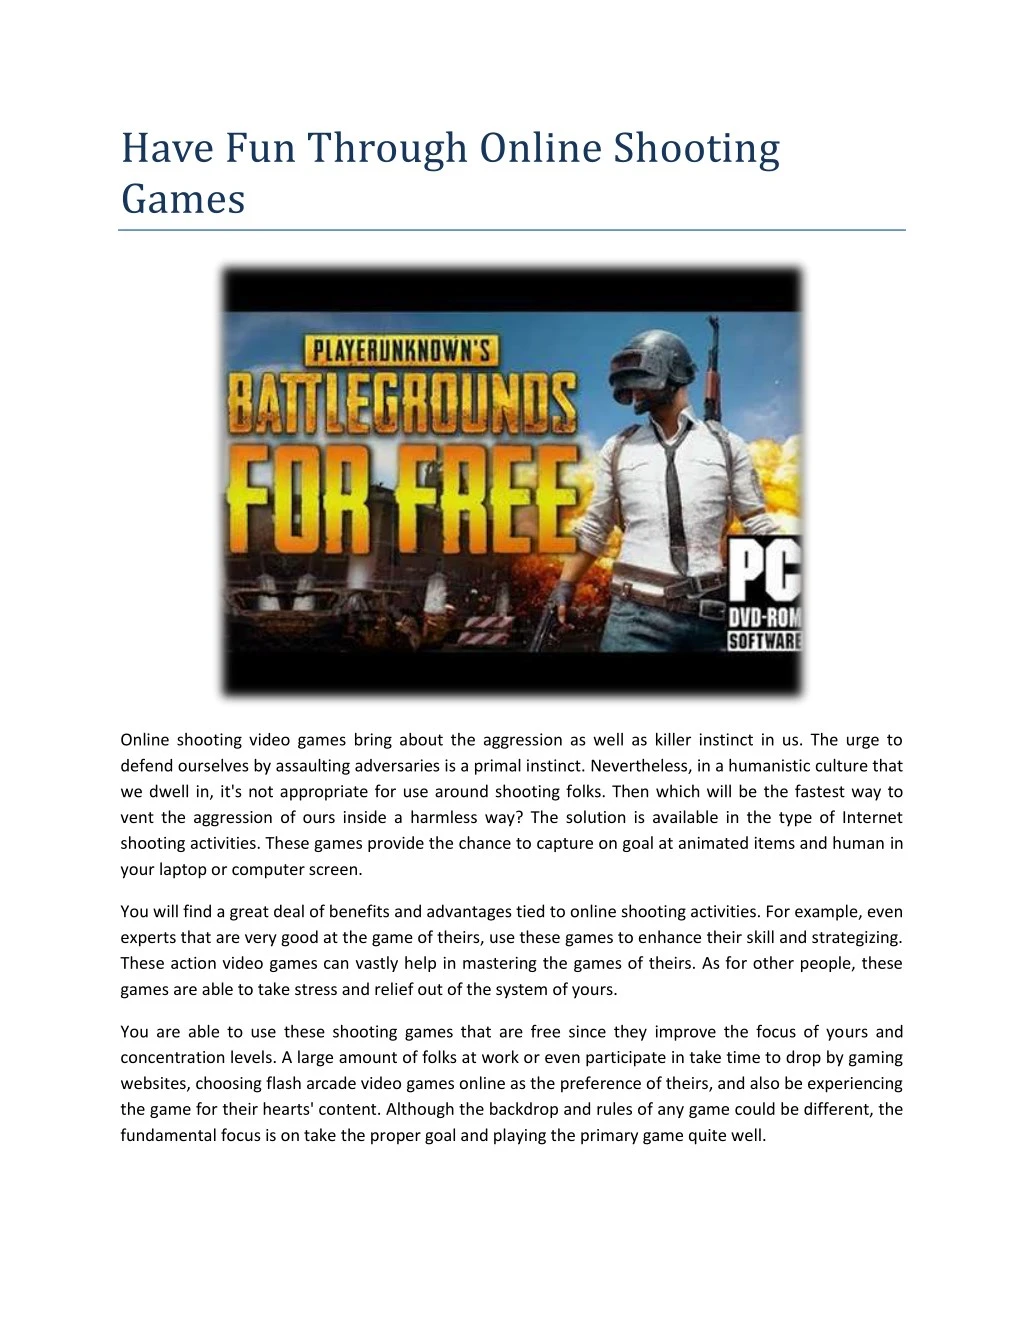 have fun through online shooting games